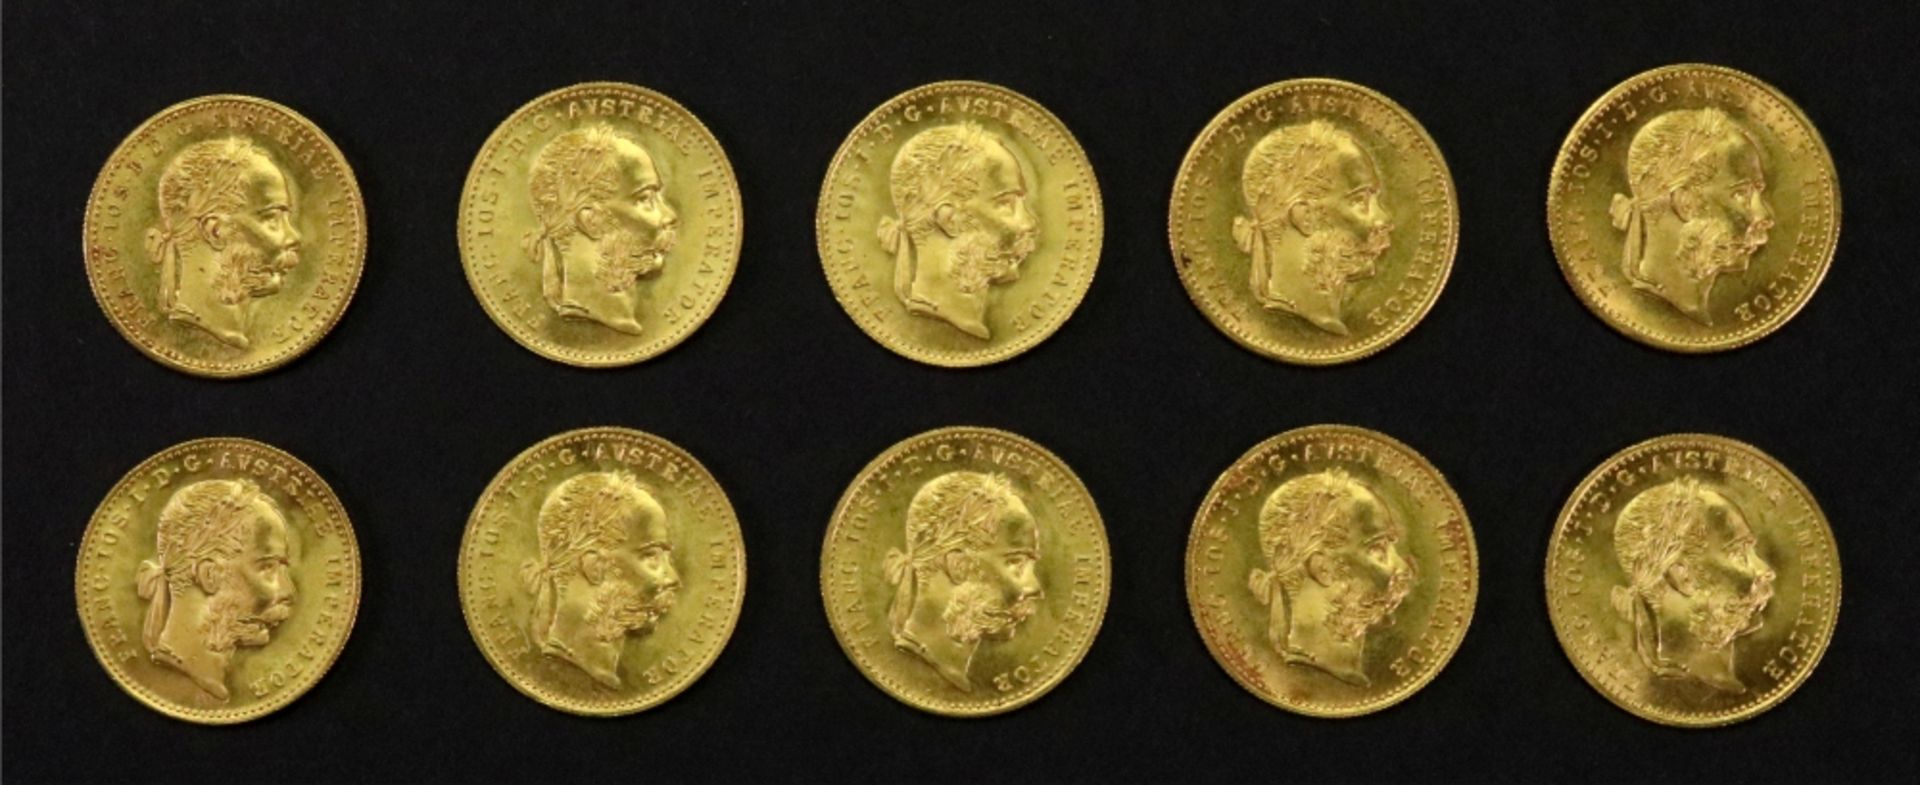 Ten Austrian 1915 gold 1 ducat, re-struck, 35g. - Image 3 of 4